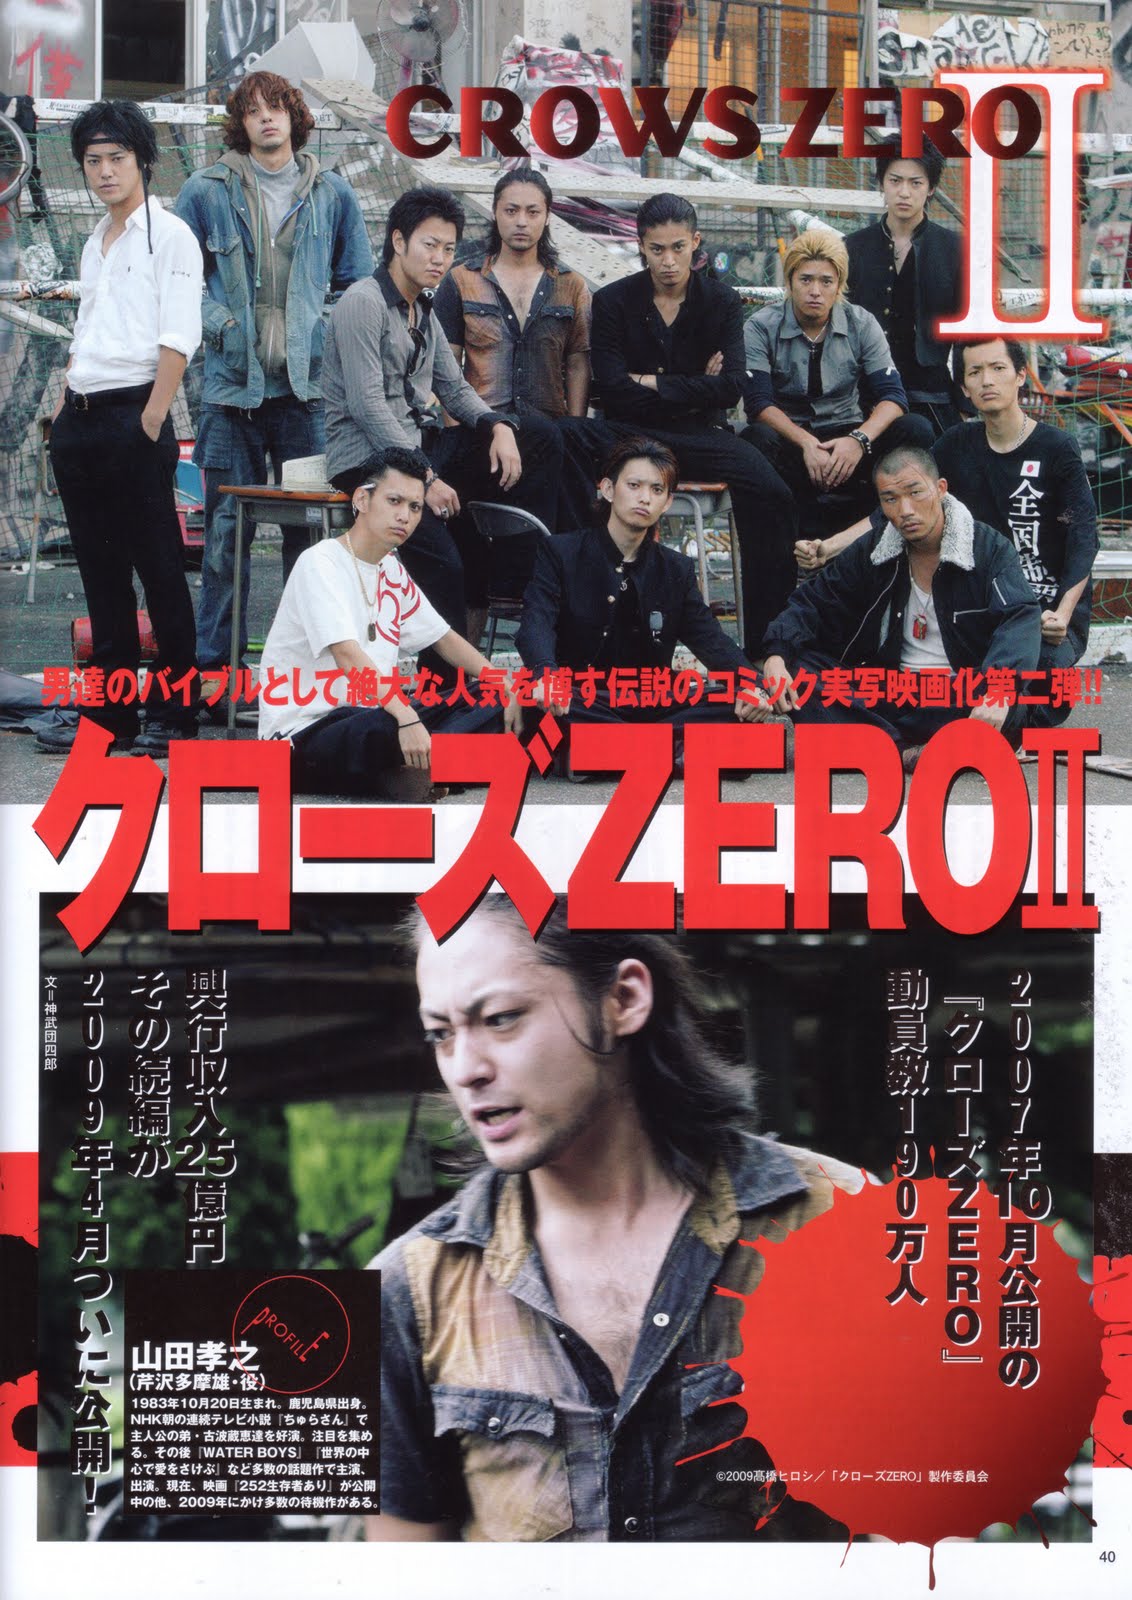 [Crows+Zero+2+_New+Style+Japanese+Movies+IZM_+2009+Vol_1_+29.jpg]